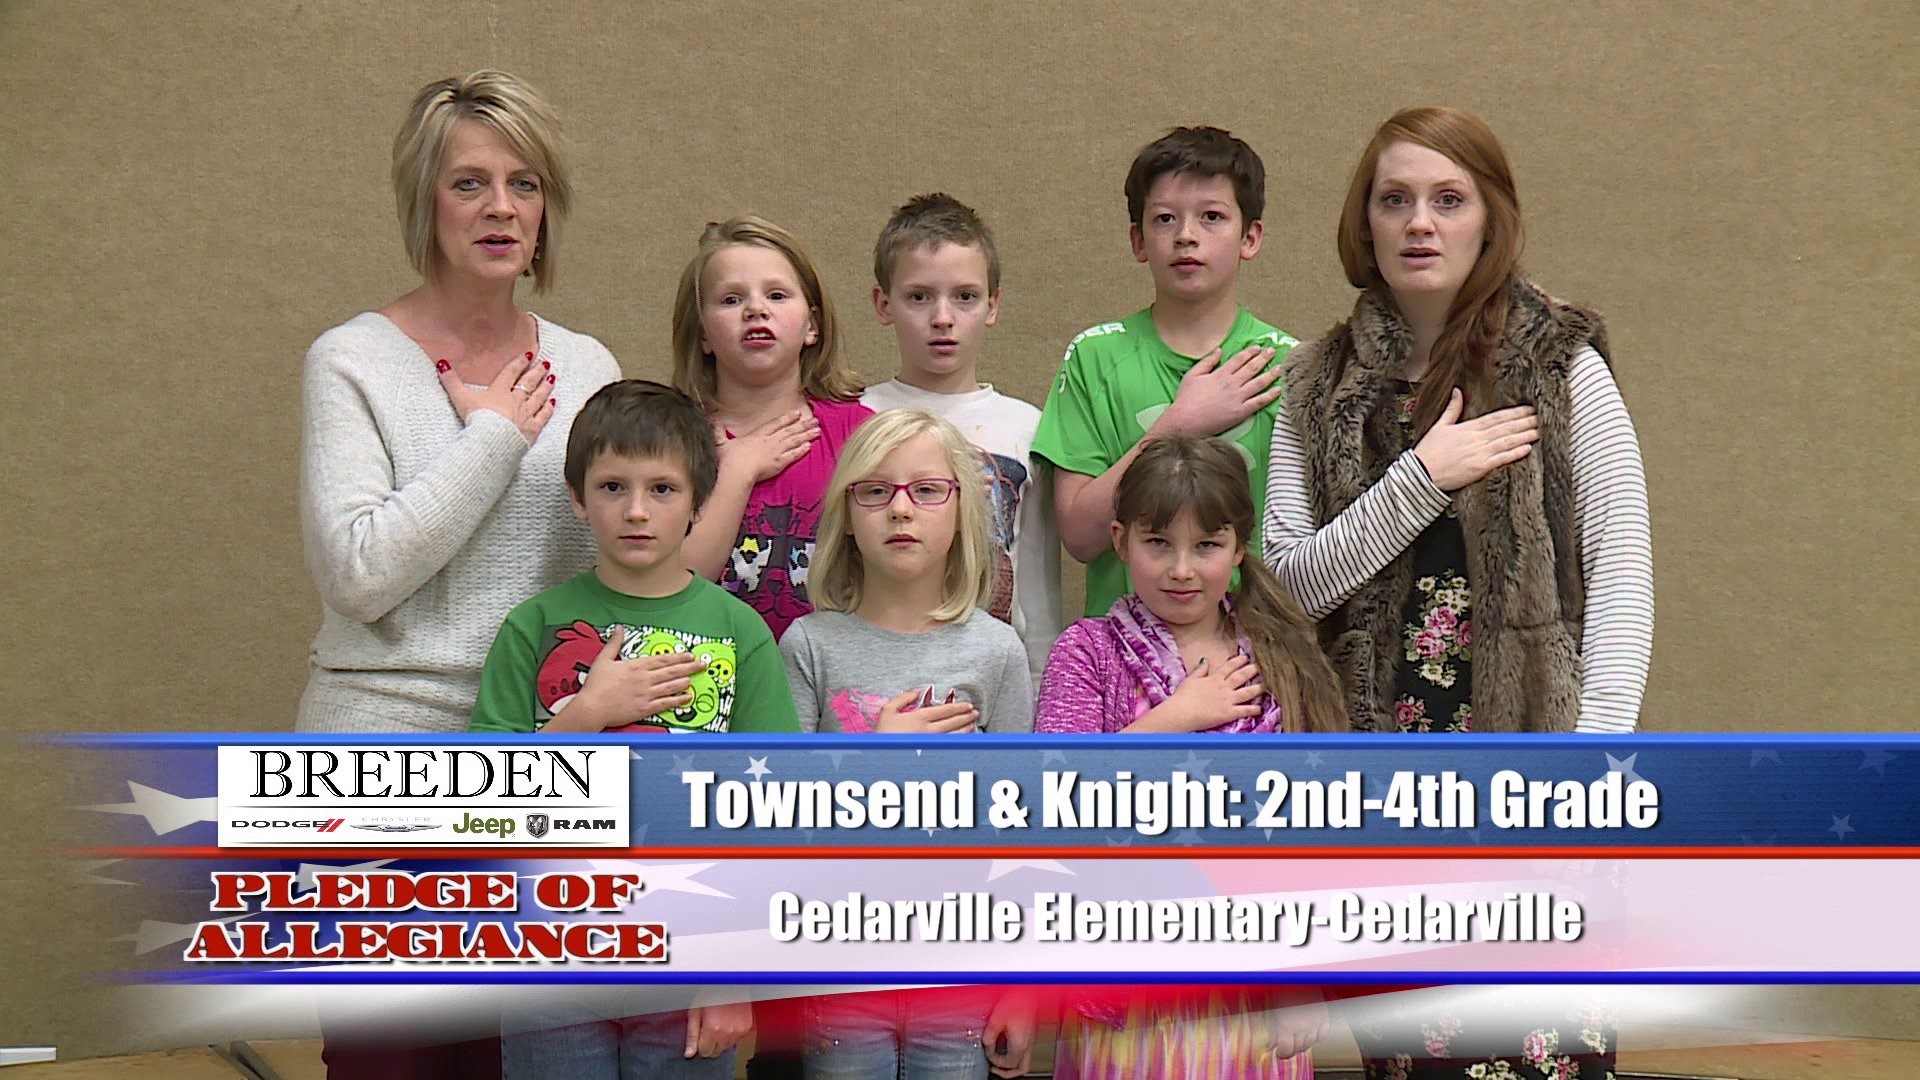 Townsend & Knight 2nd  4th Grade  Cedarville Elementary  Cedarville